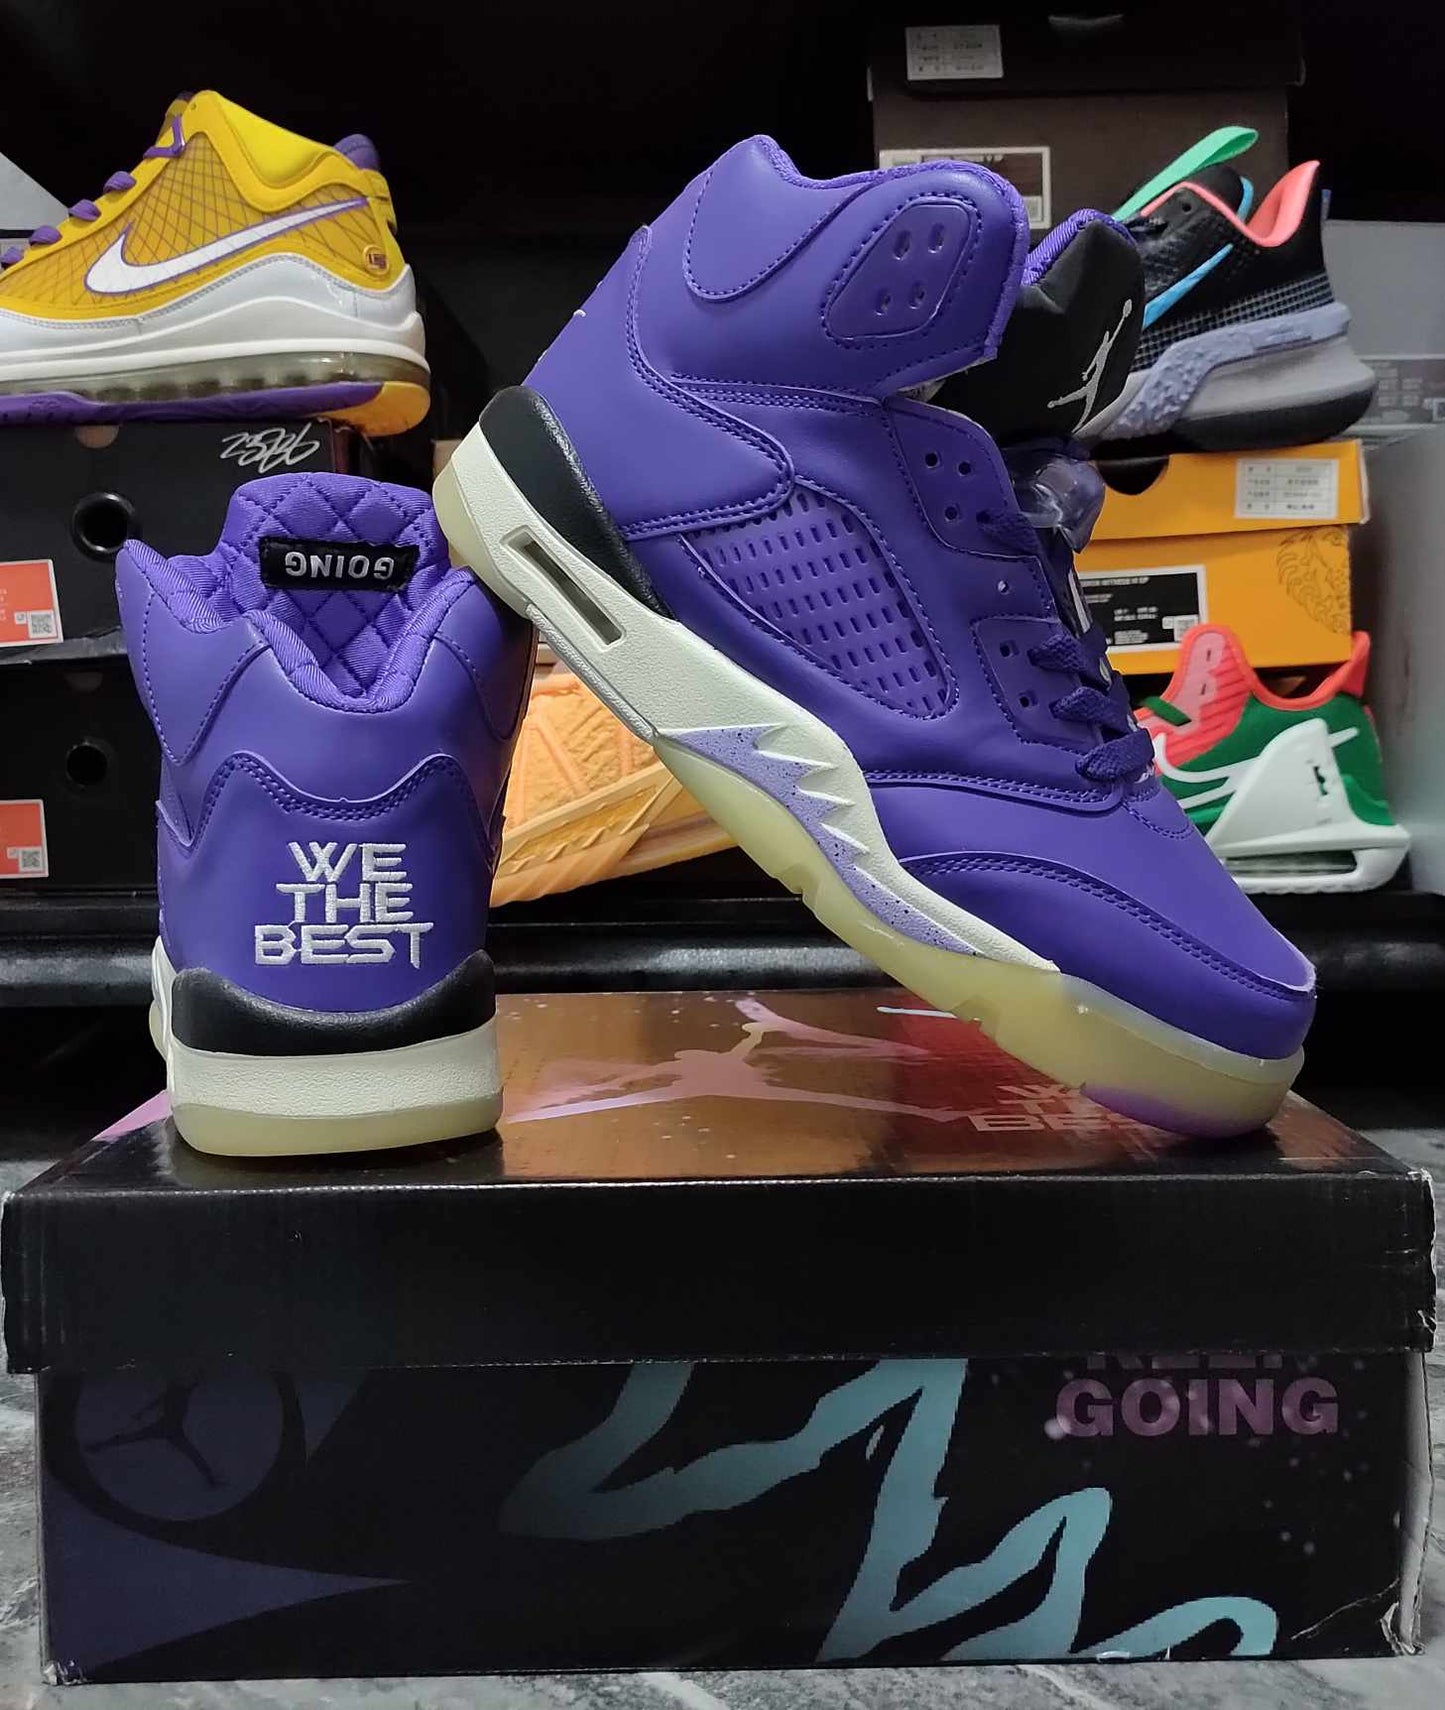 Jordan5 x DJ Khaled "Court Purple"